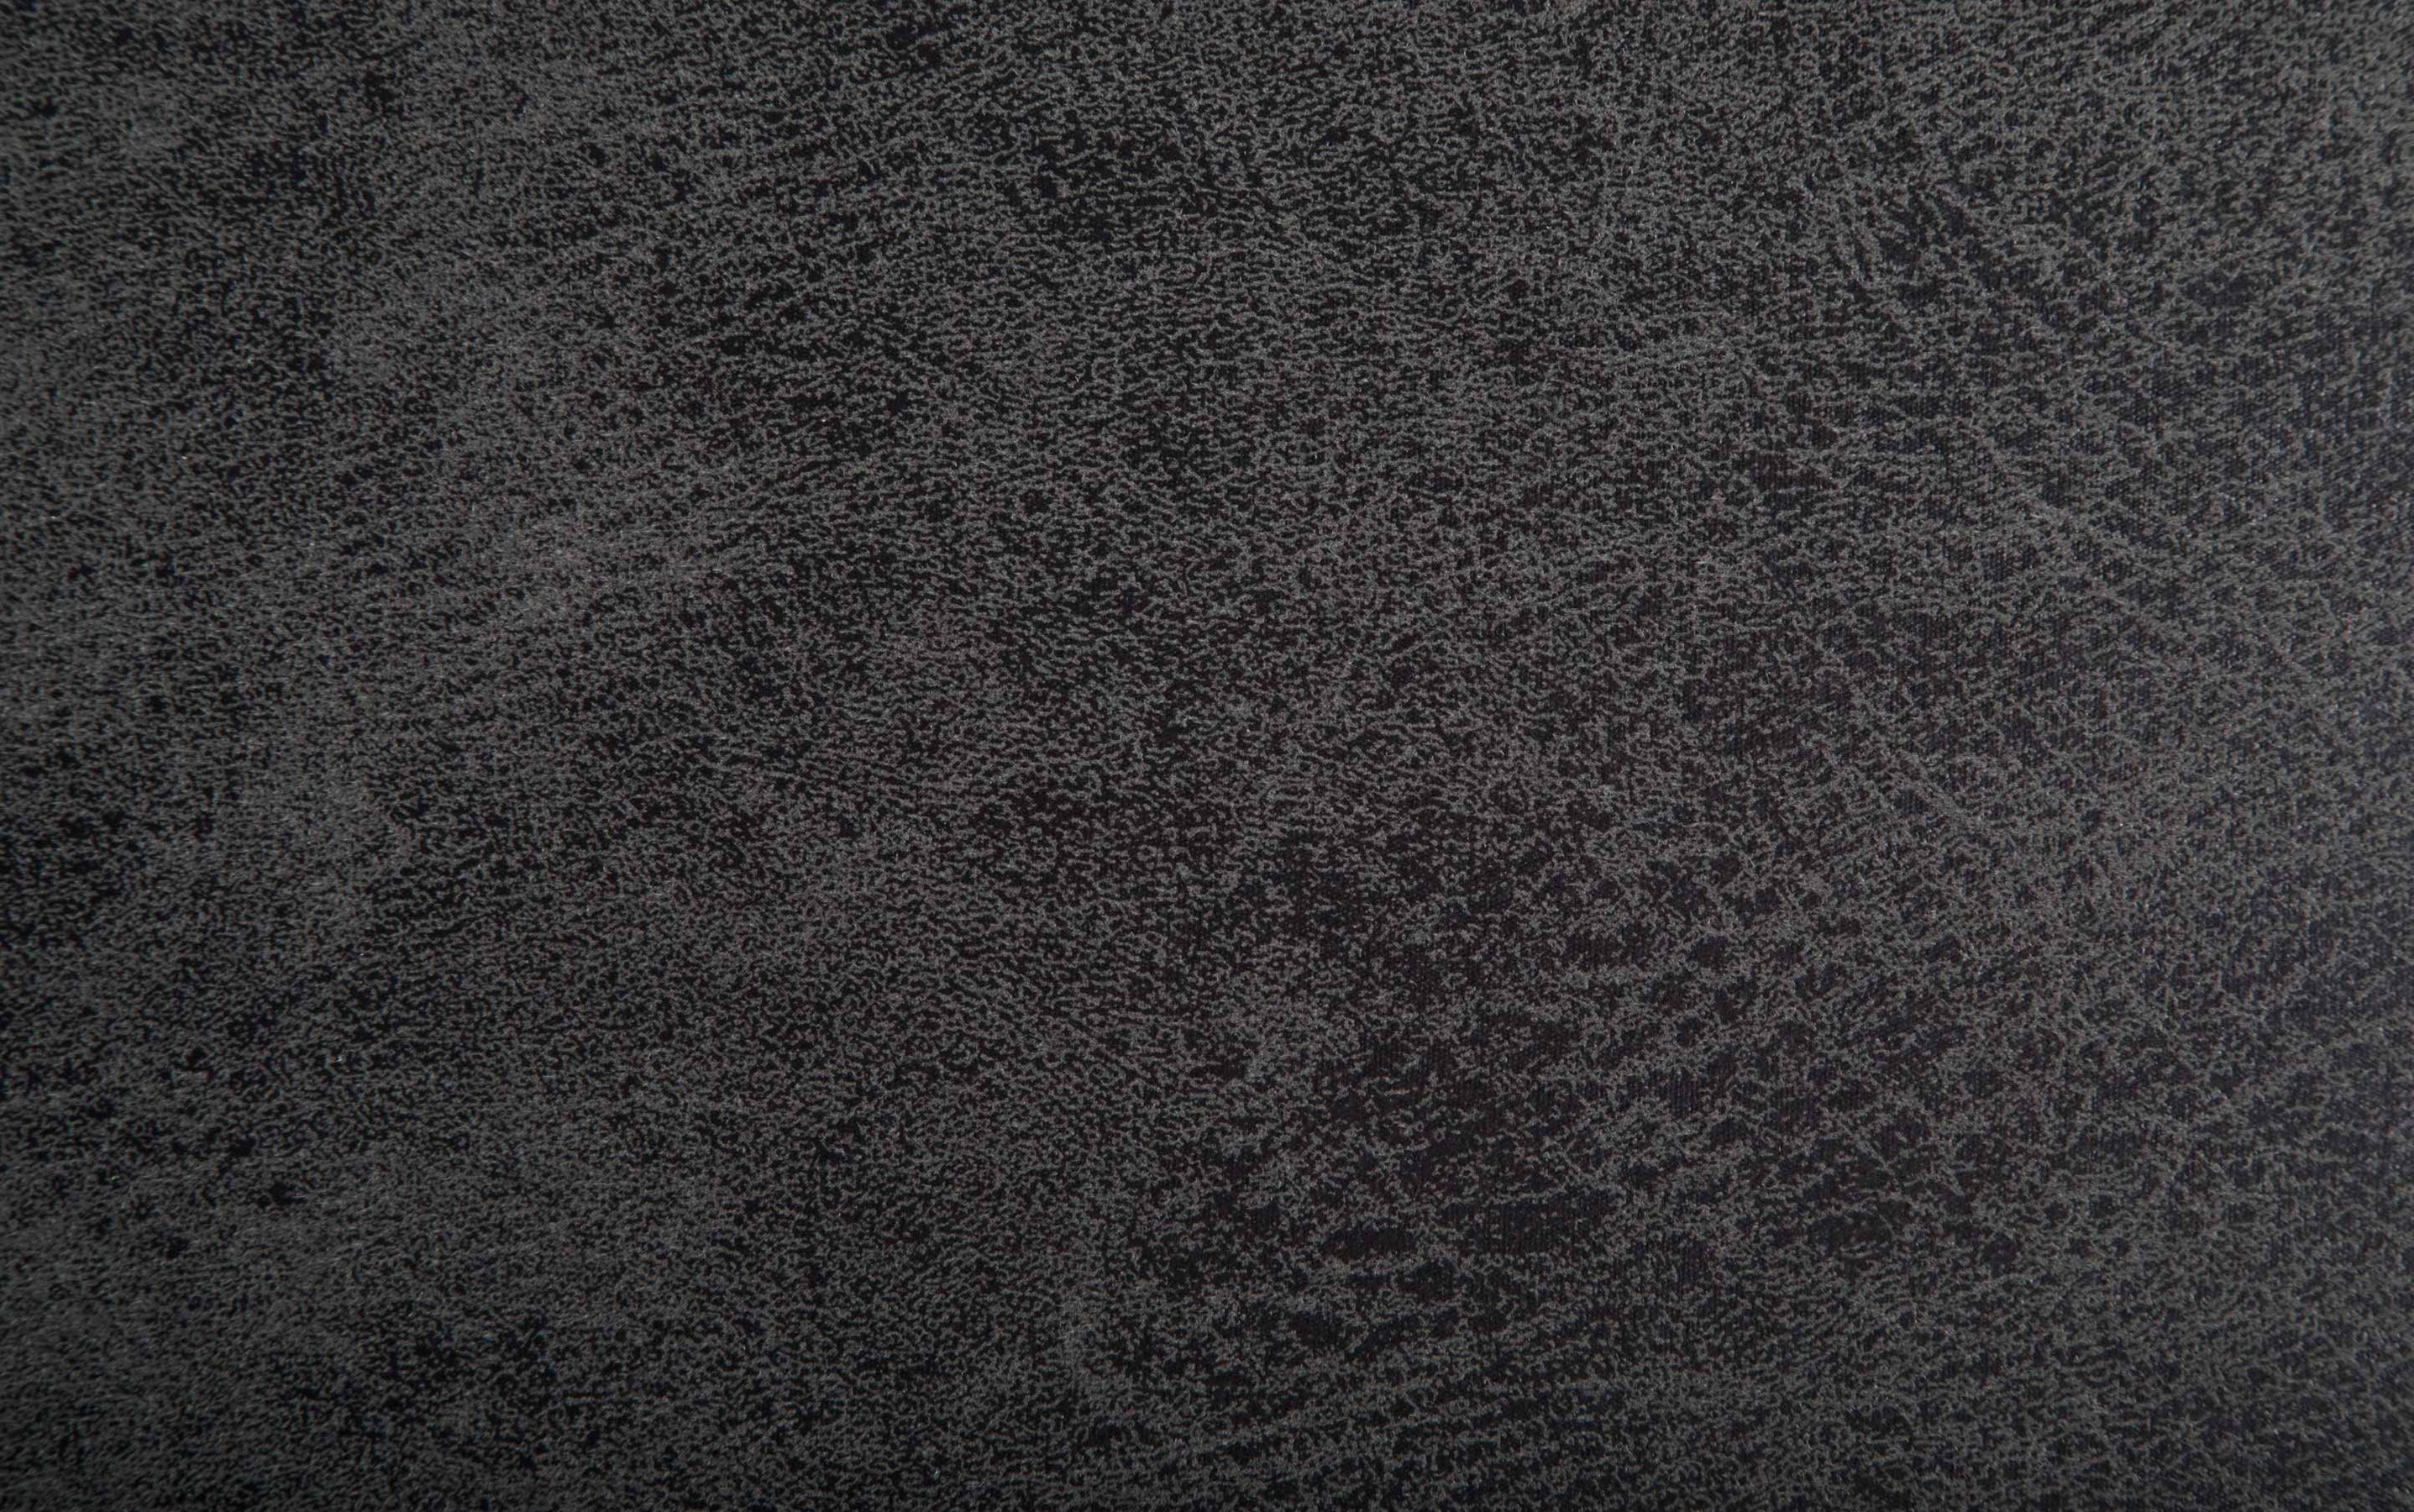 Distressed Black Distressed Vegan Leather | Shay Mid Century Large Square Coffee Table Storage Ottoman